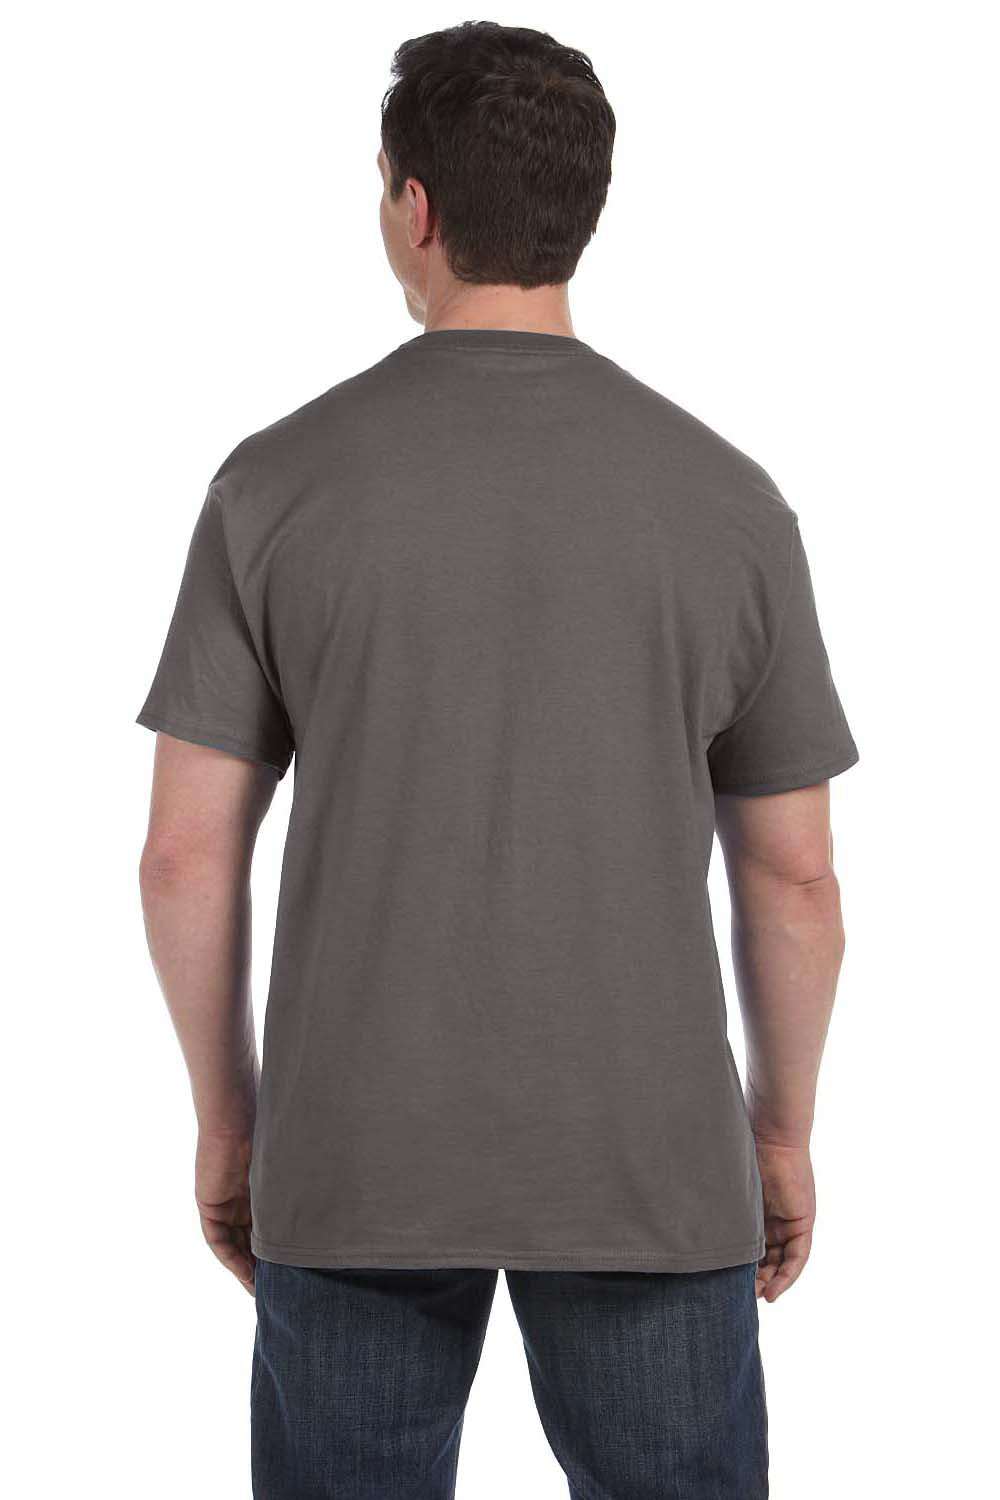 Hanes H5590 Mens ComfortSoft Short Sleeve Crewneck T-Shirt w/ Pocket Smoke Grey Back